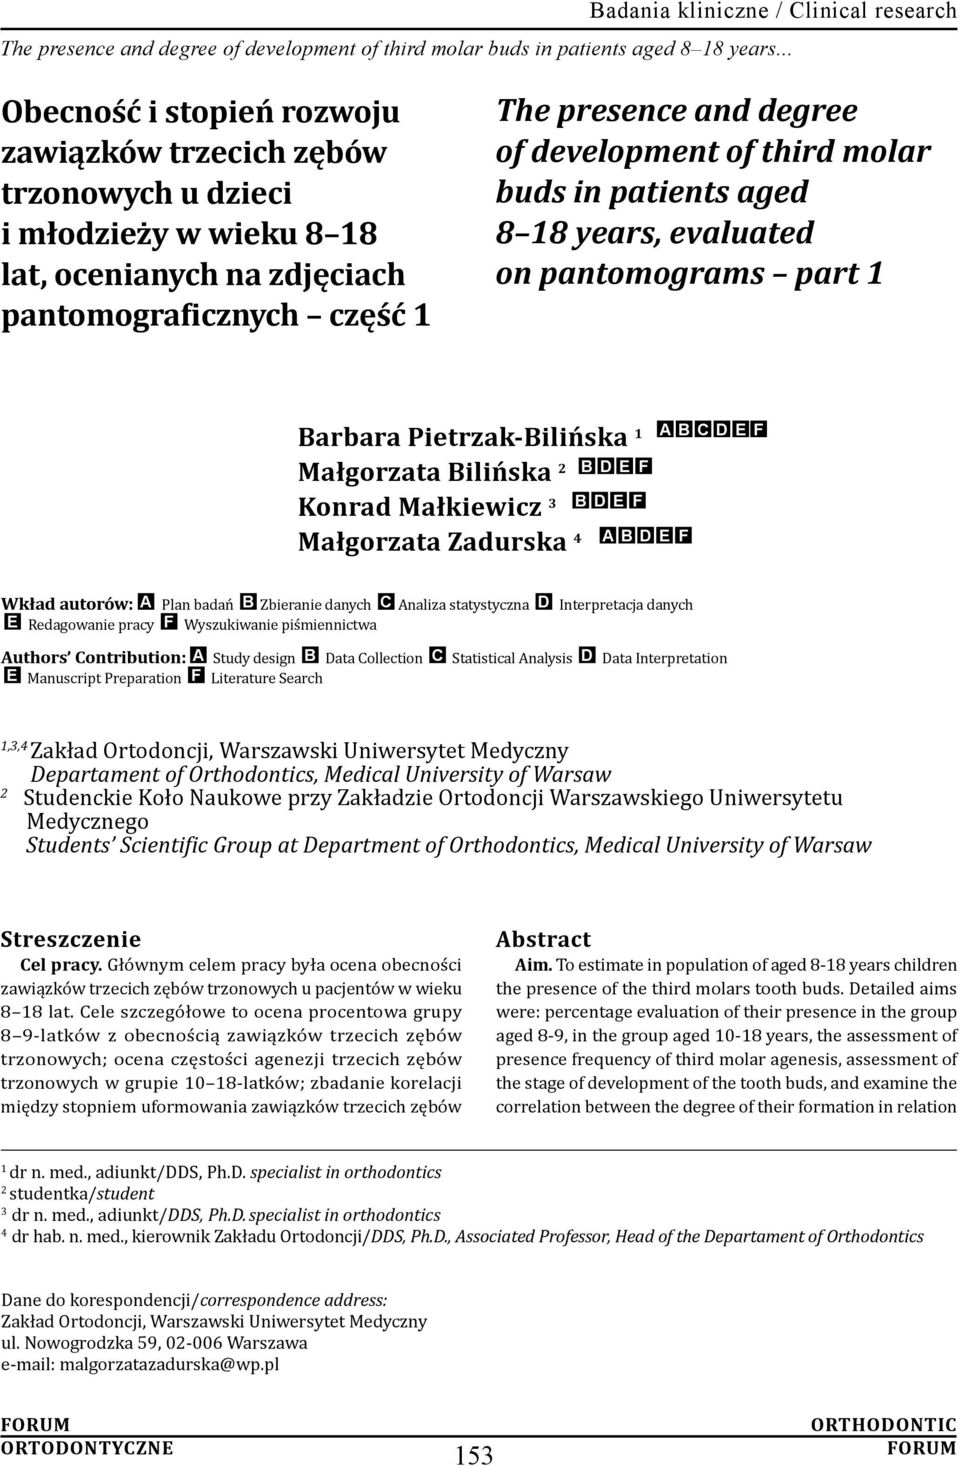 third molar buds in patients aged 8 18 years, evaluated on pantomograms part 1 Barbara Pietrzak-Bilińska 1 A B C D E Małgorzata Bilińska 2 Konrad Małkiewicz 3 B D E B D E F F Małgorzata Zadurska 4 A